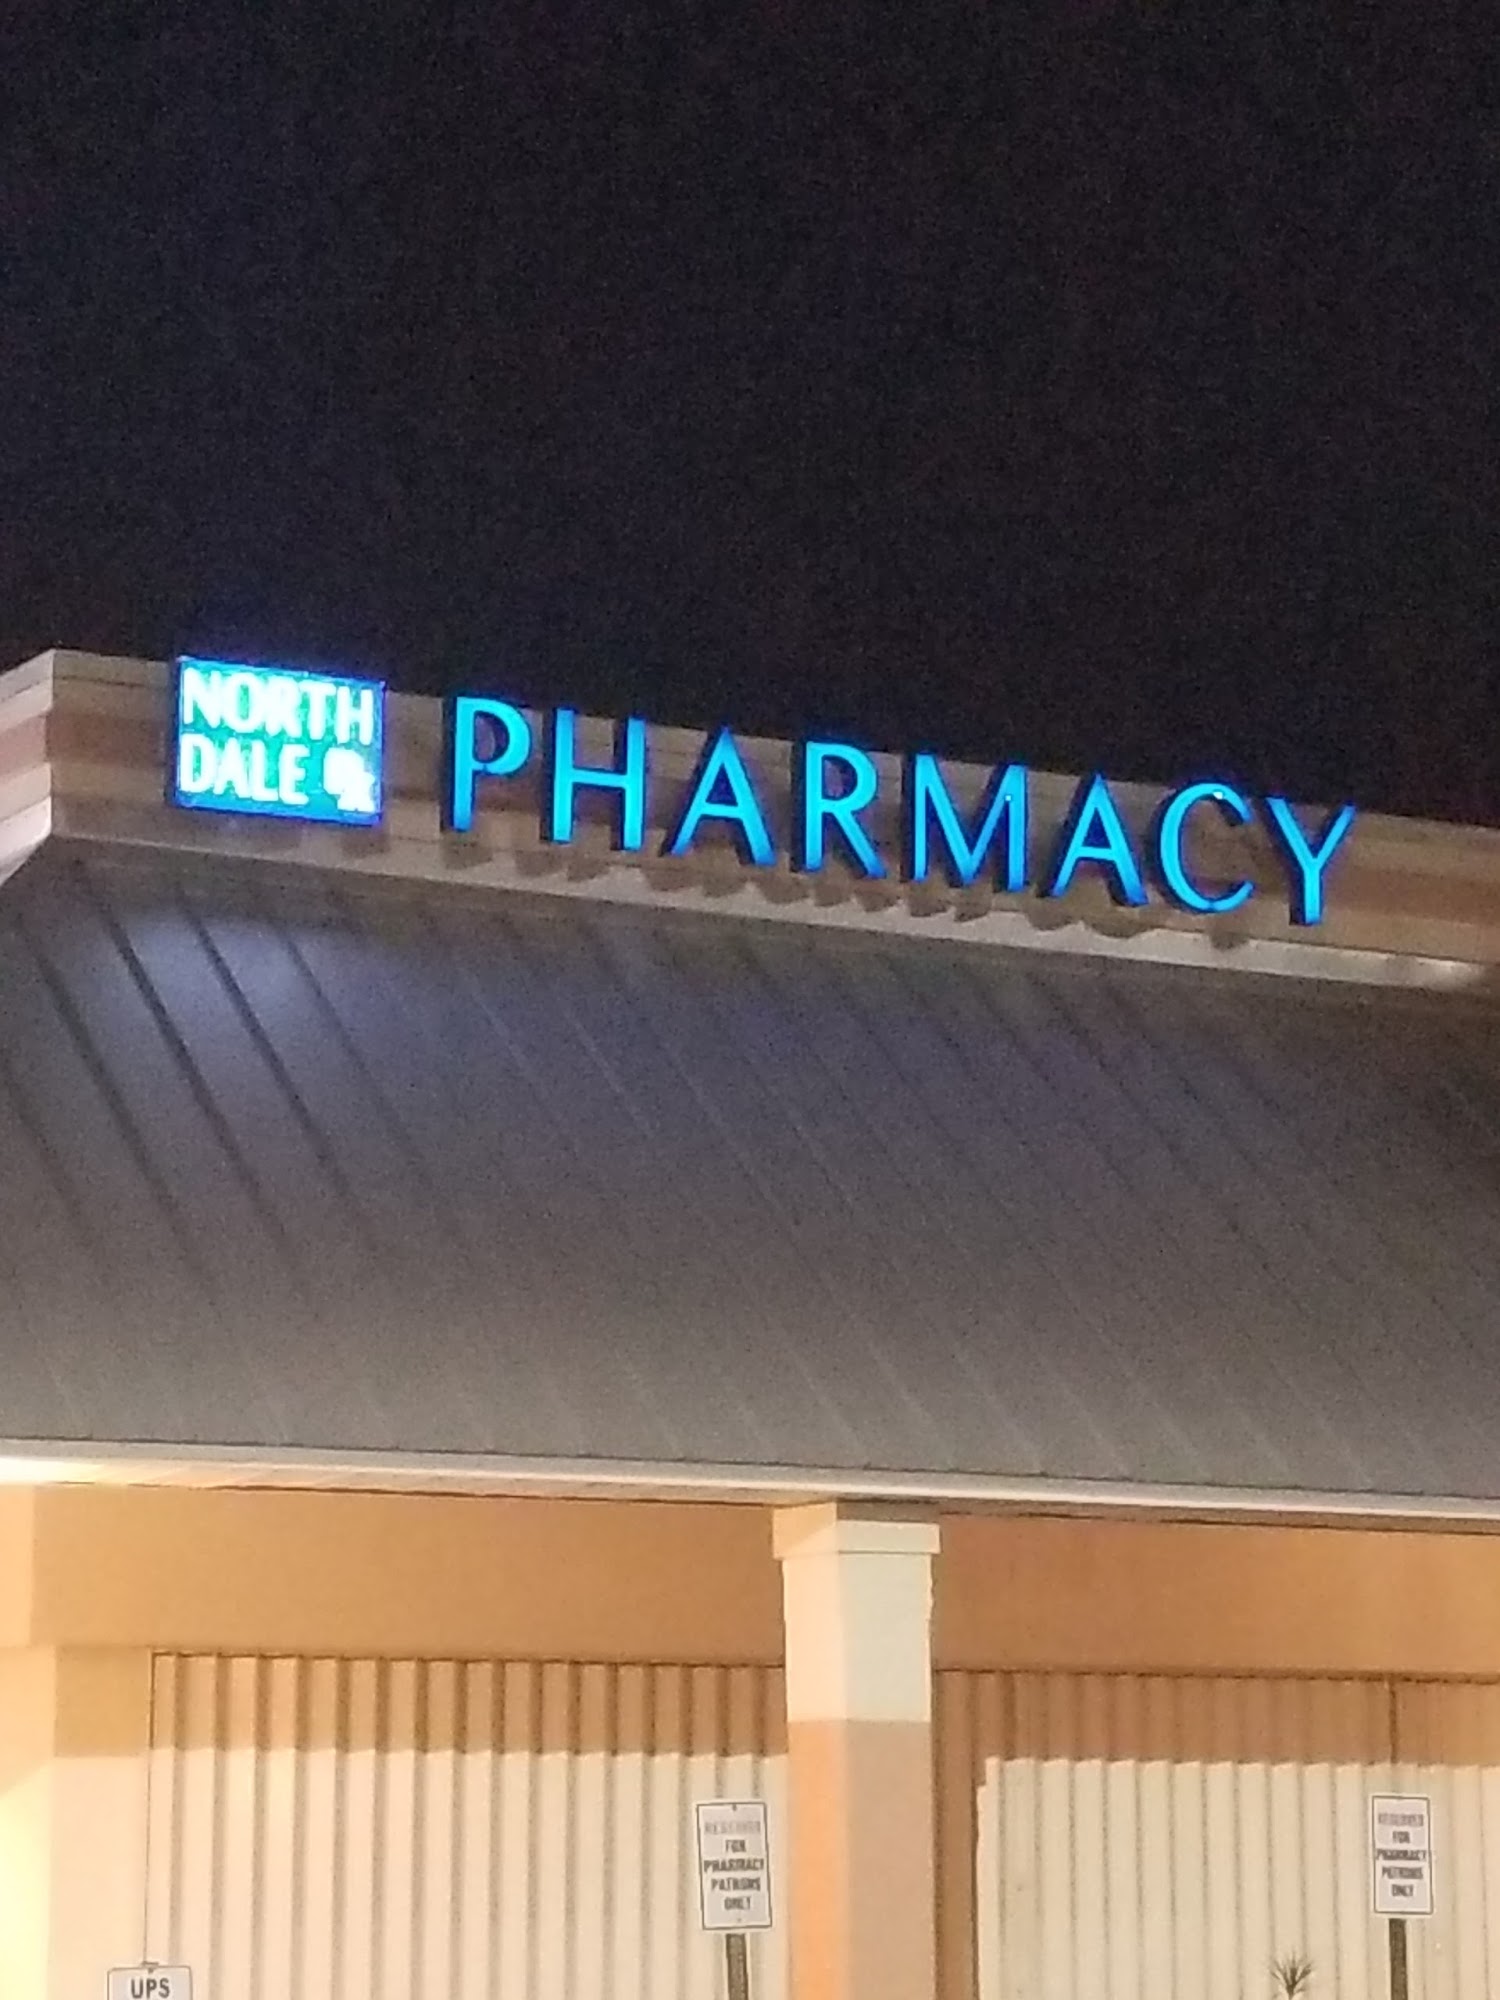 North Dale Pharmacy Inc